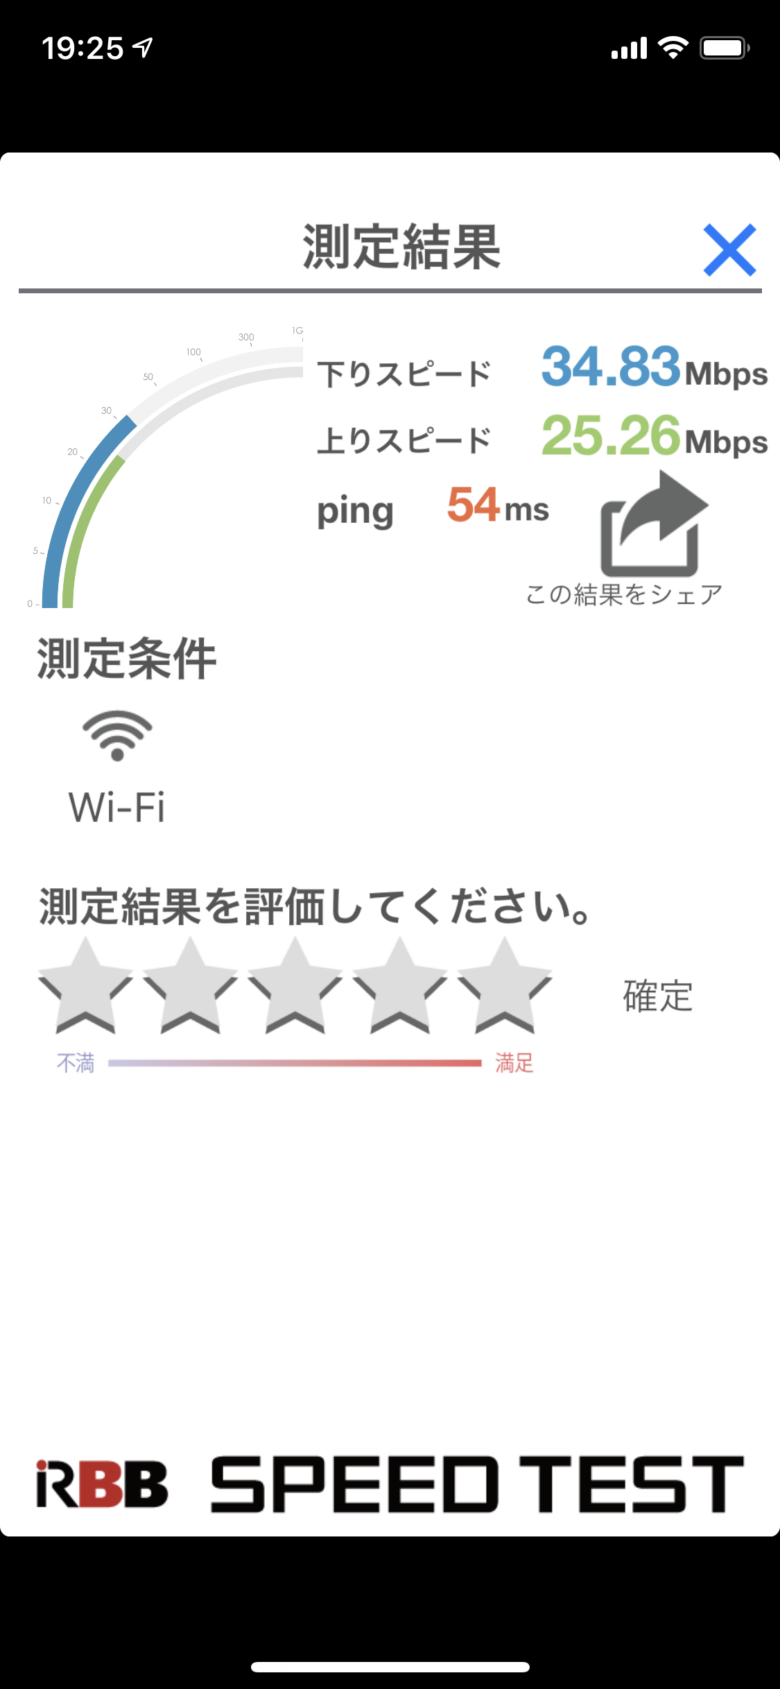 FUJI Wifiの19時台の通信速度